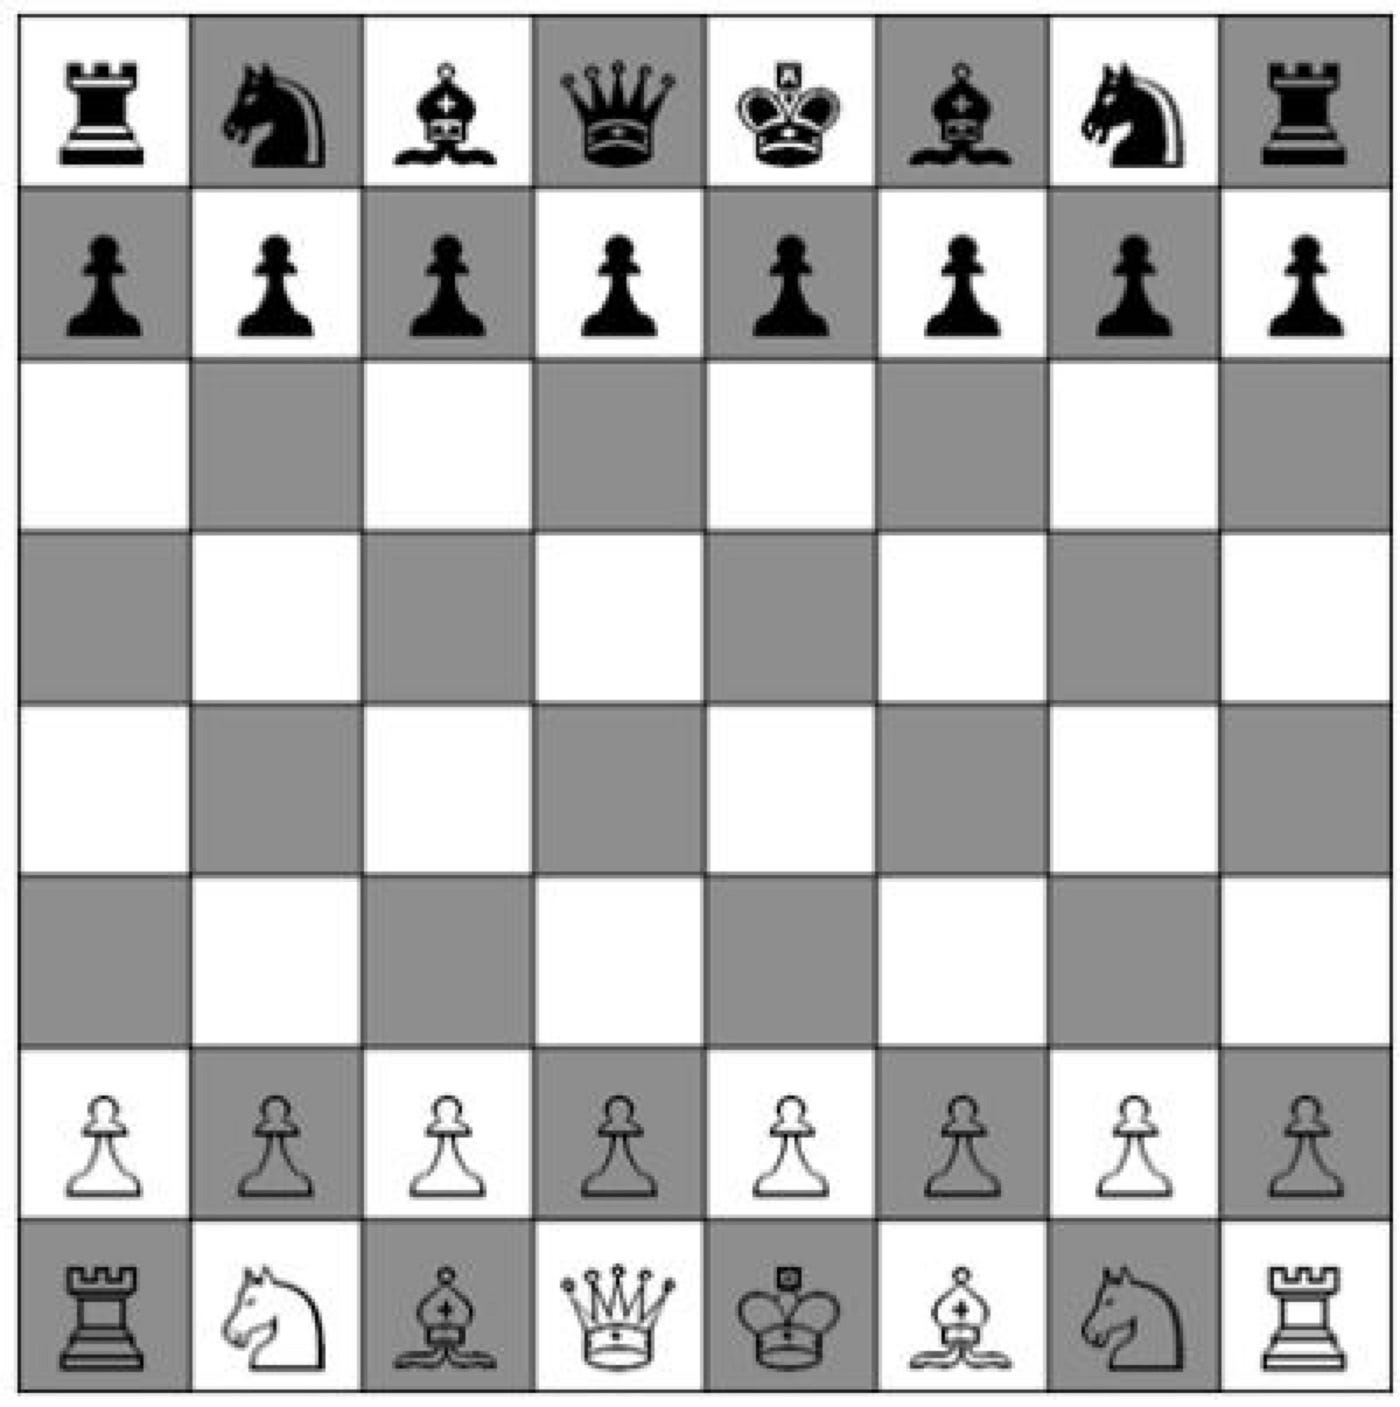 Medium Chess Puzzles 21 to 30